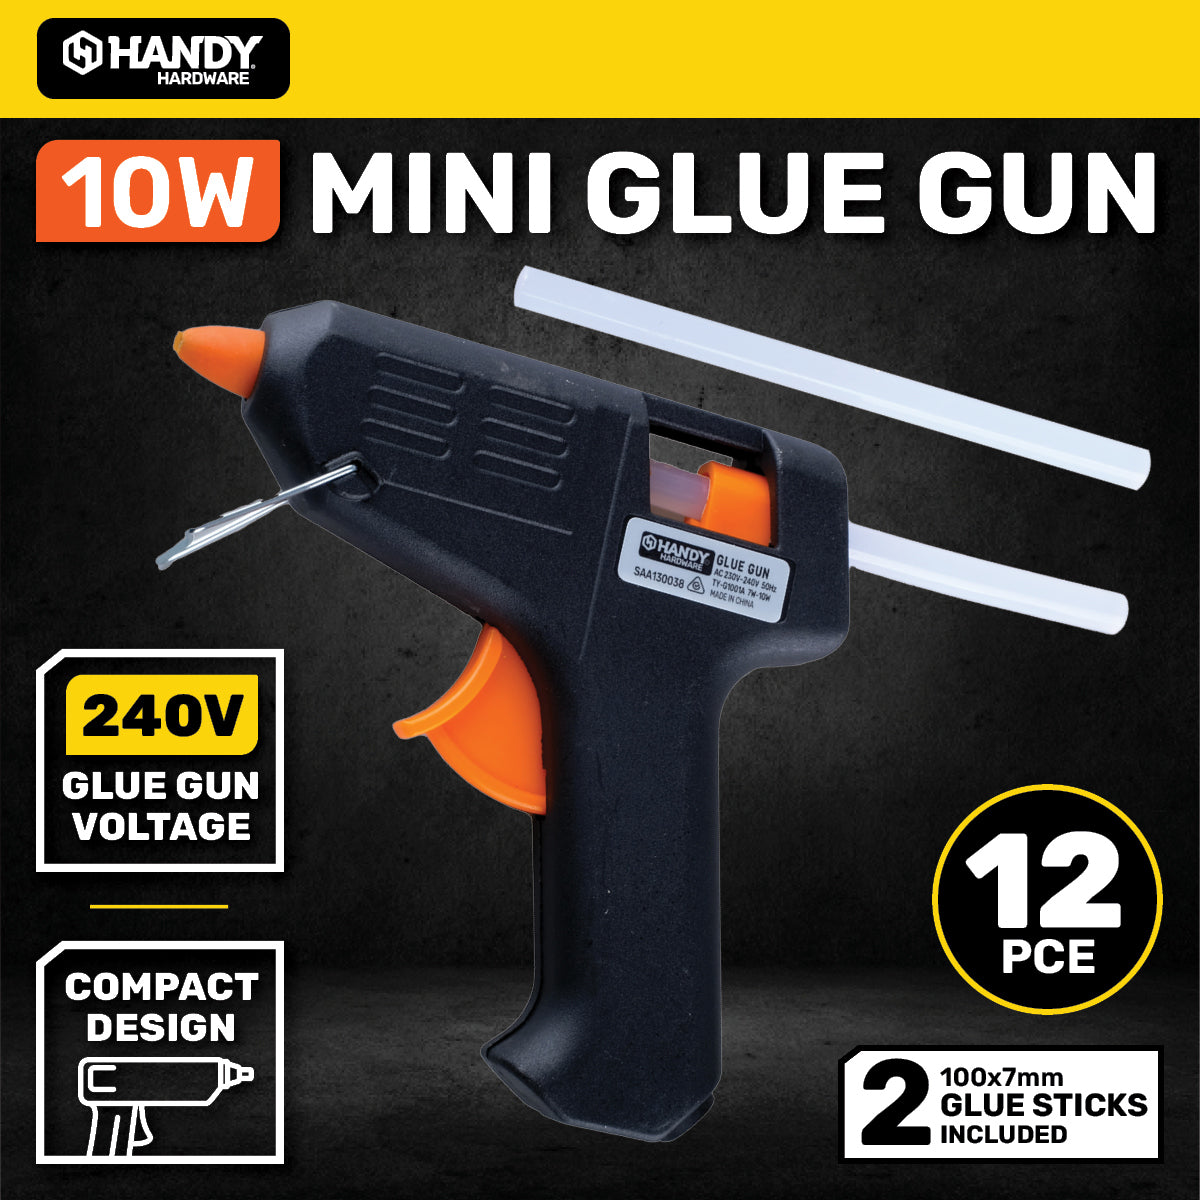 Handy Hardware 10W Mini Glue Gun Glue Sticks Included 240V Compact Design